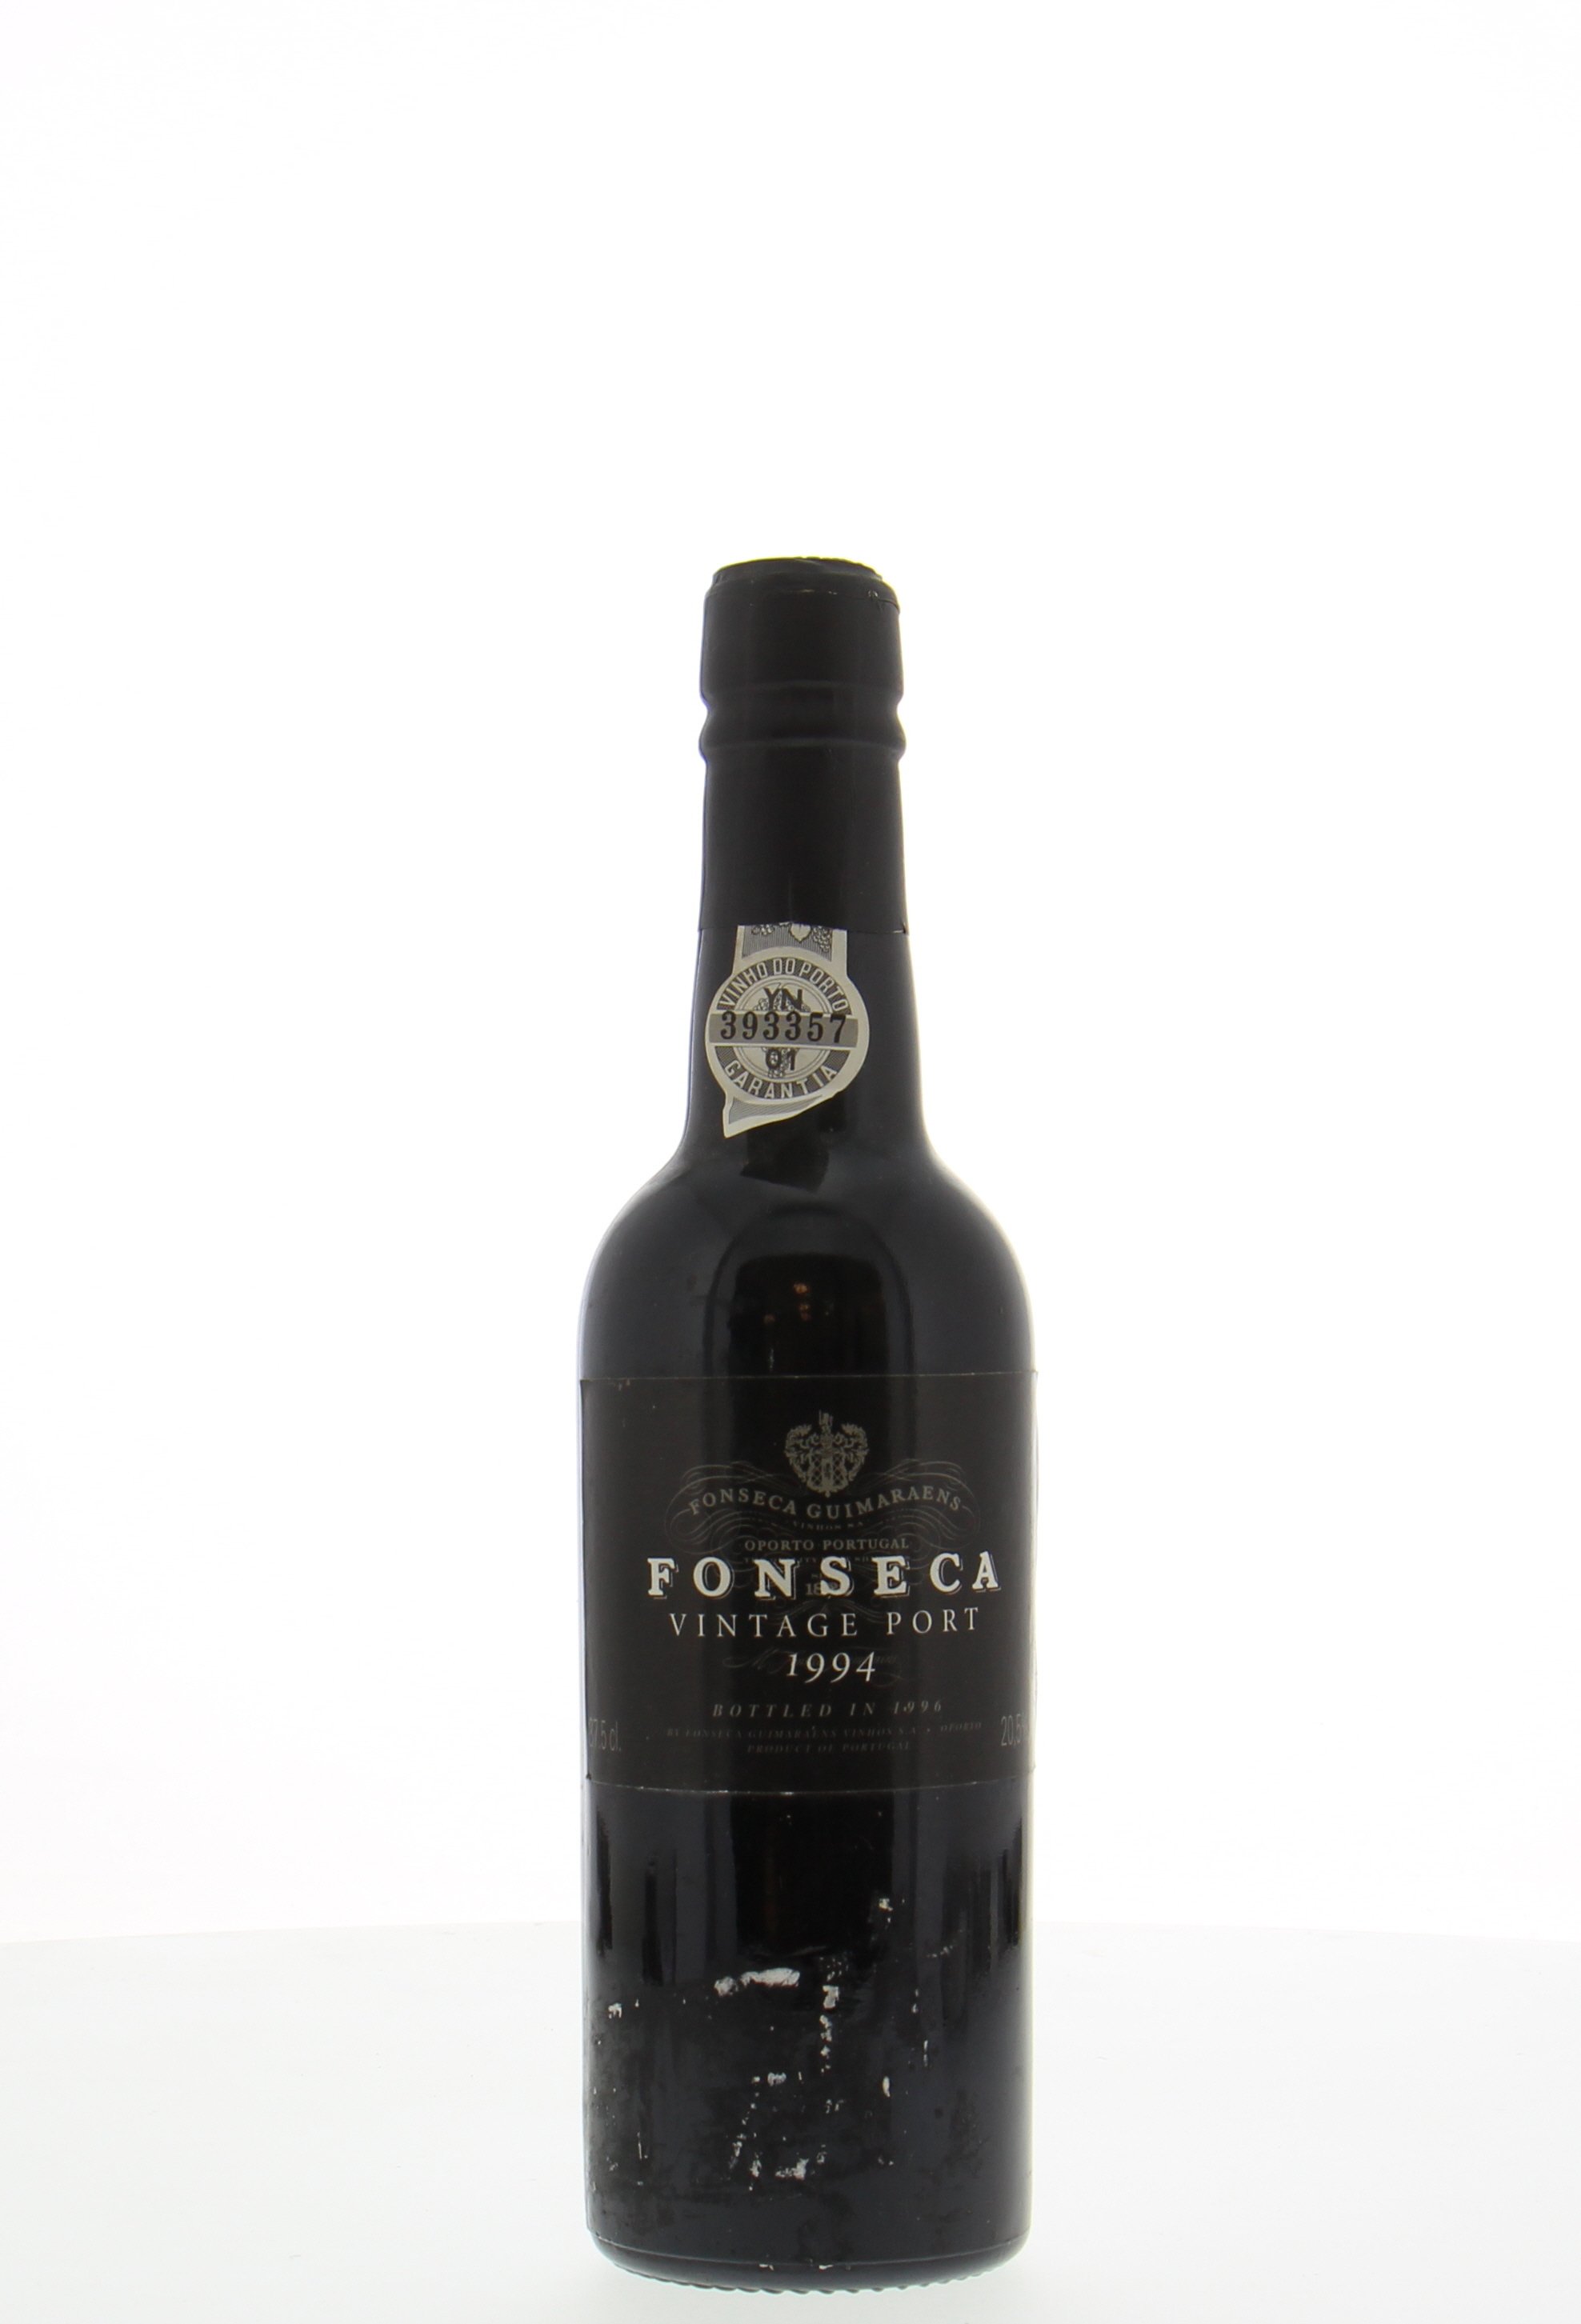 Fonseca - Vintage Port 1994 Perfect